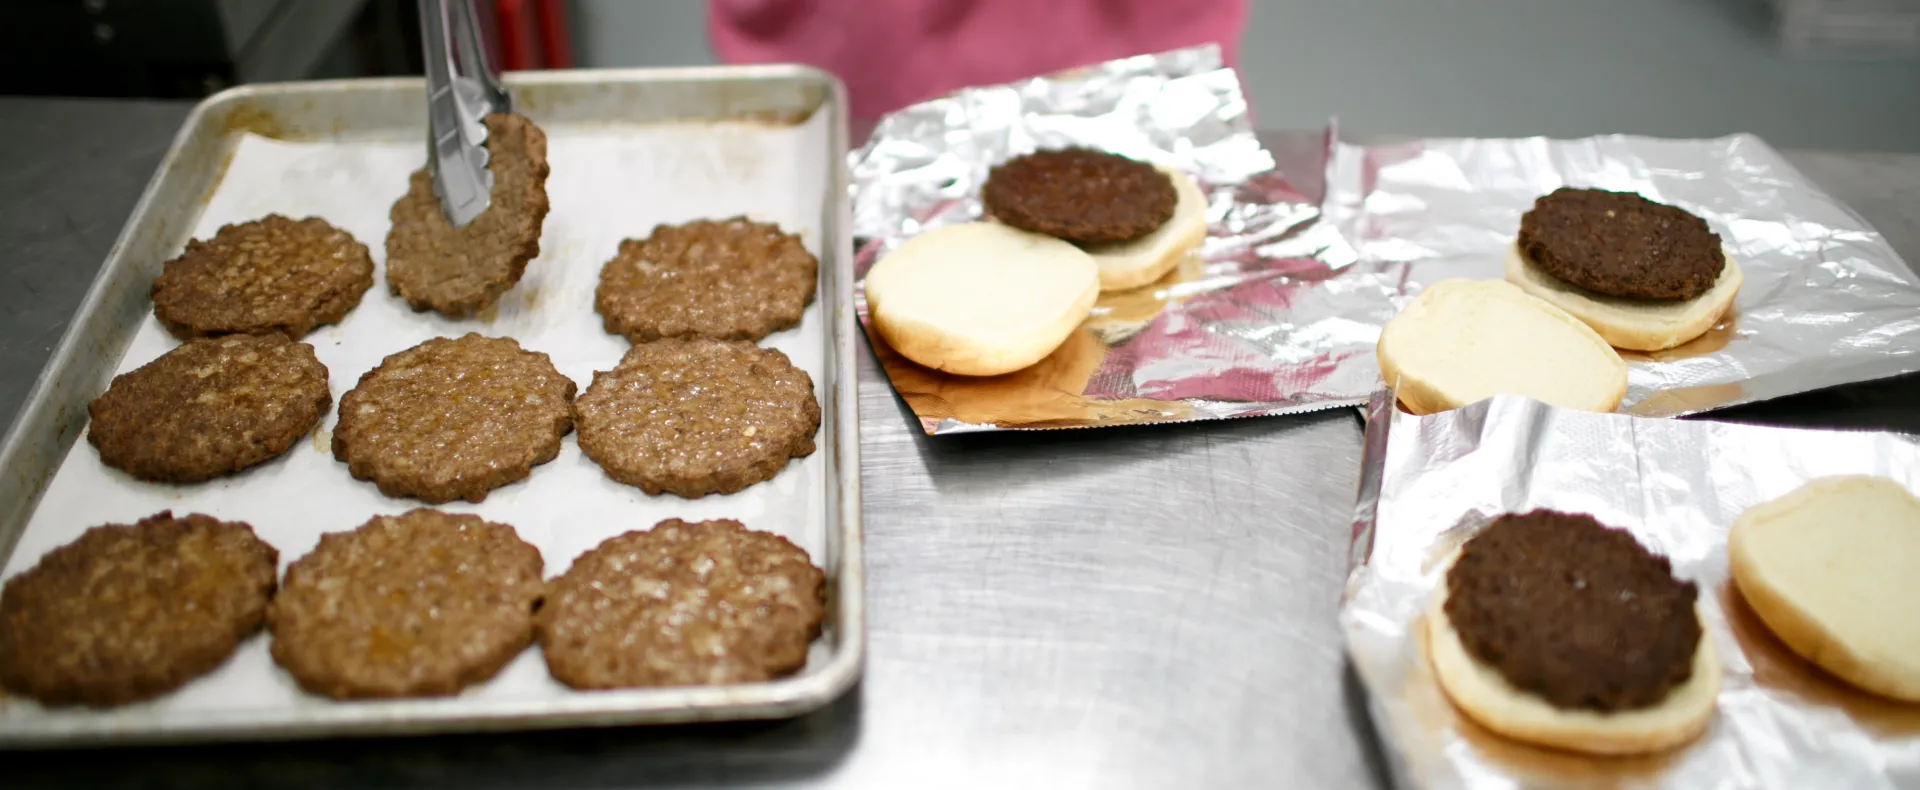 Hamburgers being prepared in an industrial kitchen